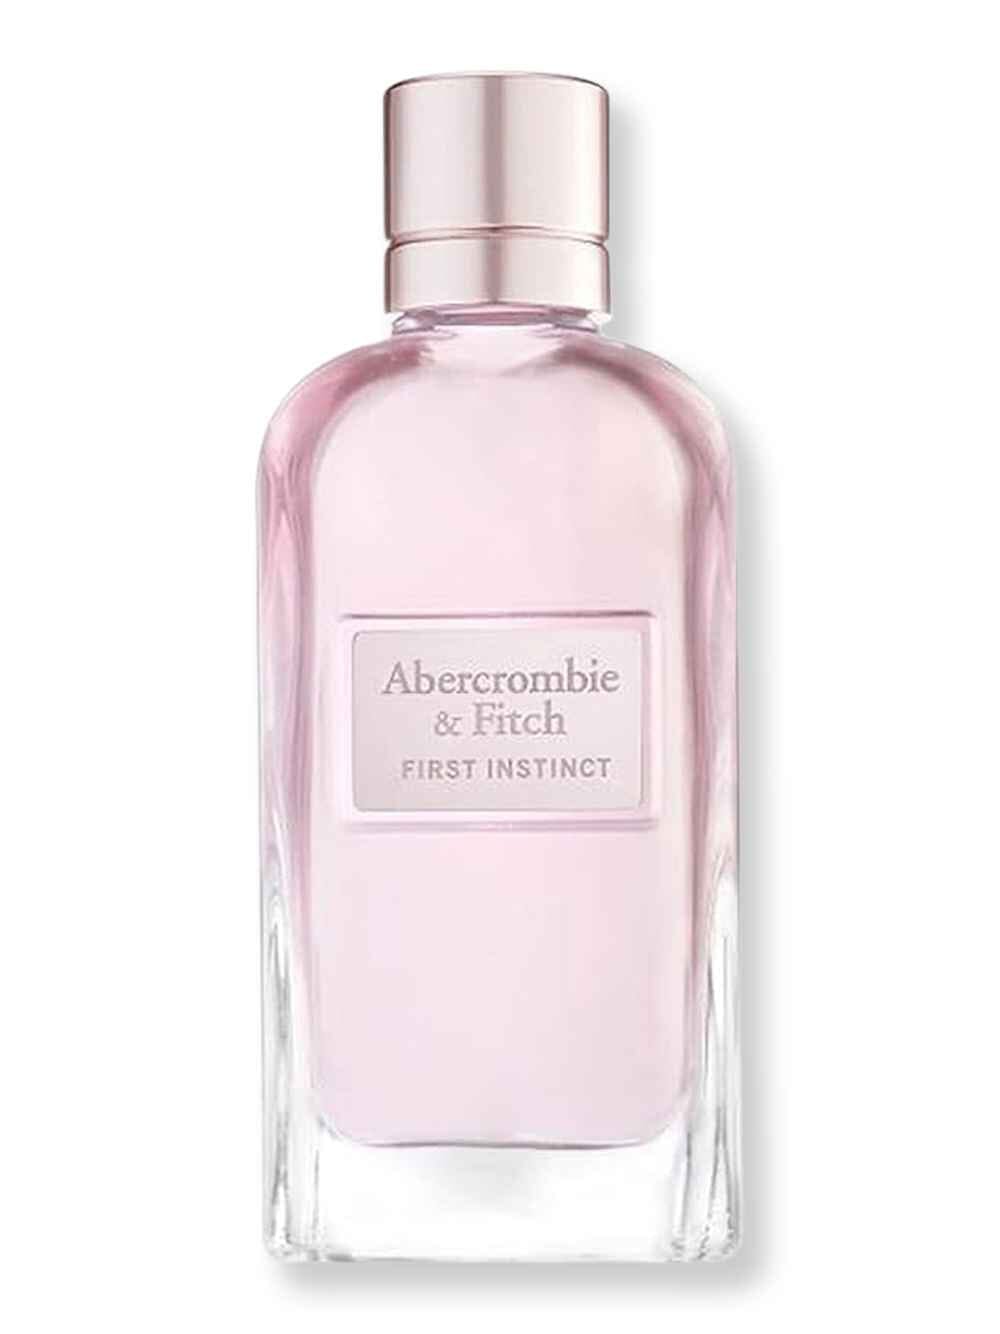 Abercrombie & Fitch Abercrombie & Fitch First Instinct EDP Spray 1.7 oz50 ml Perfume 